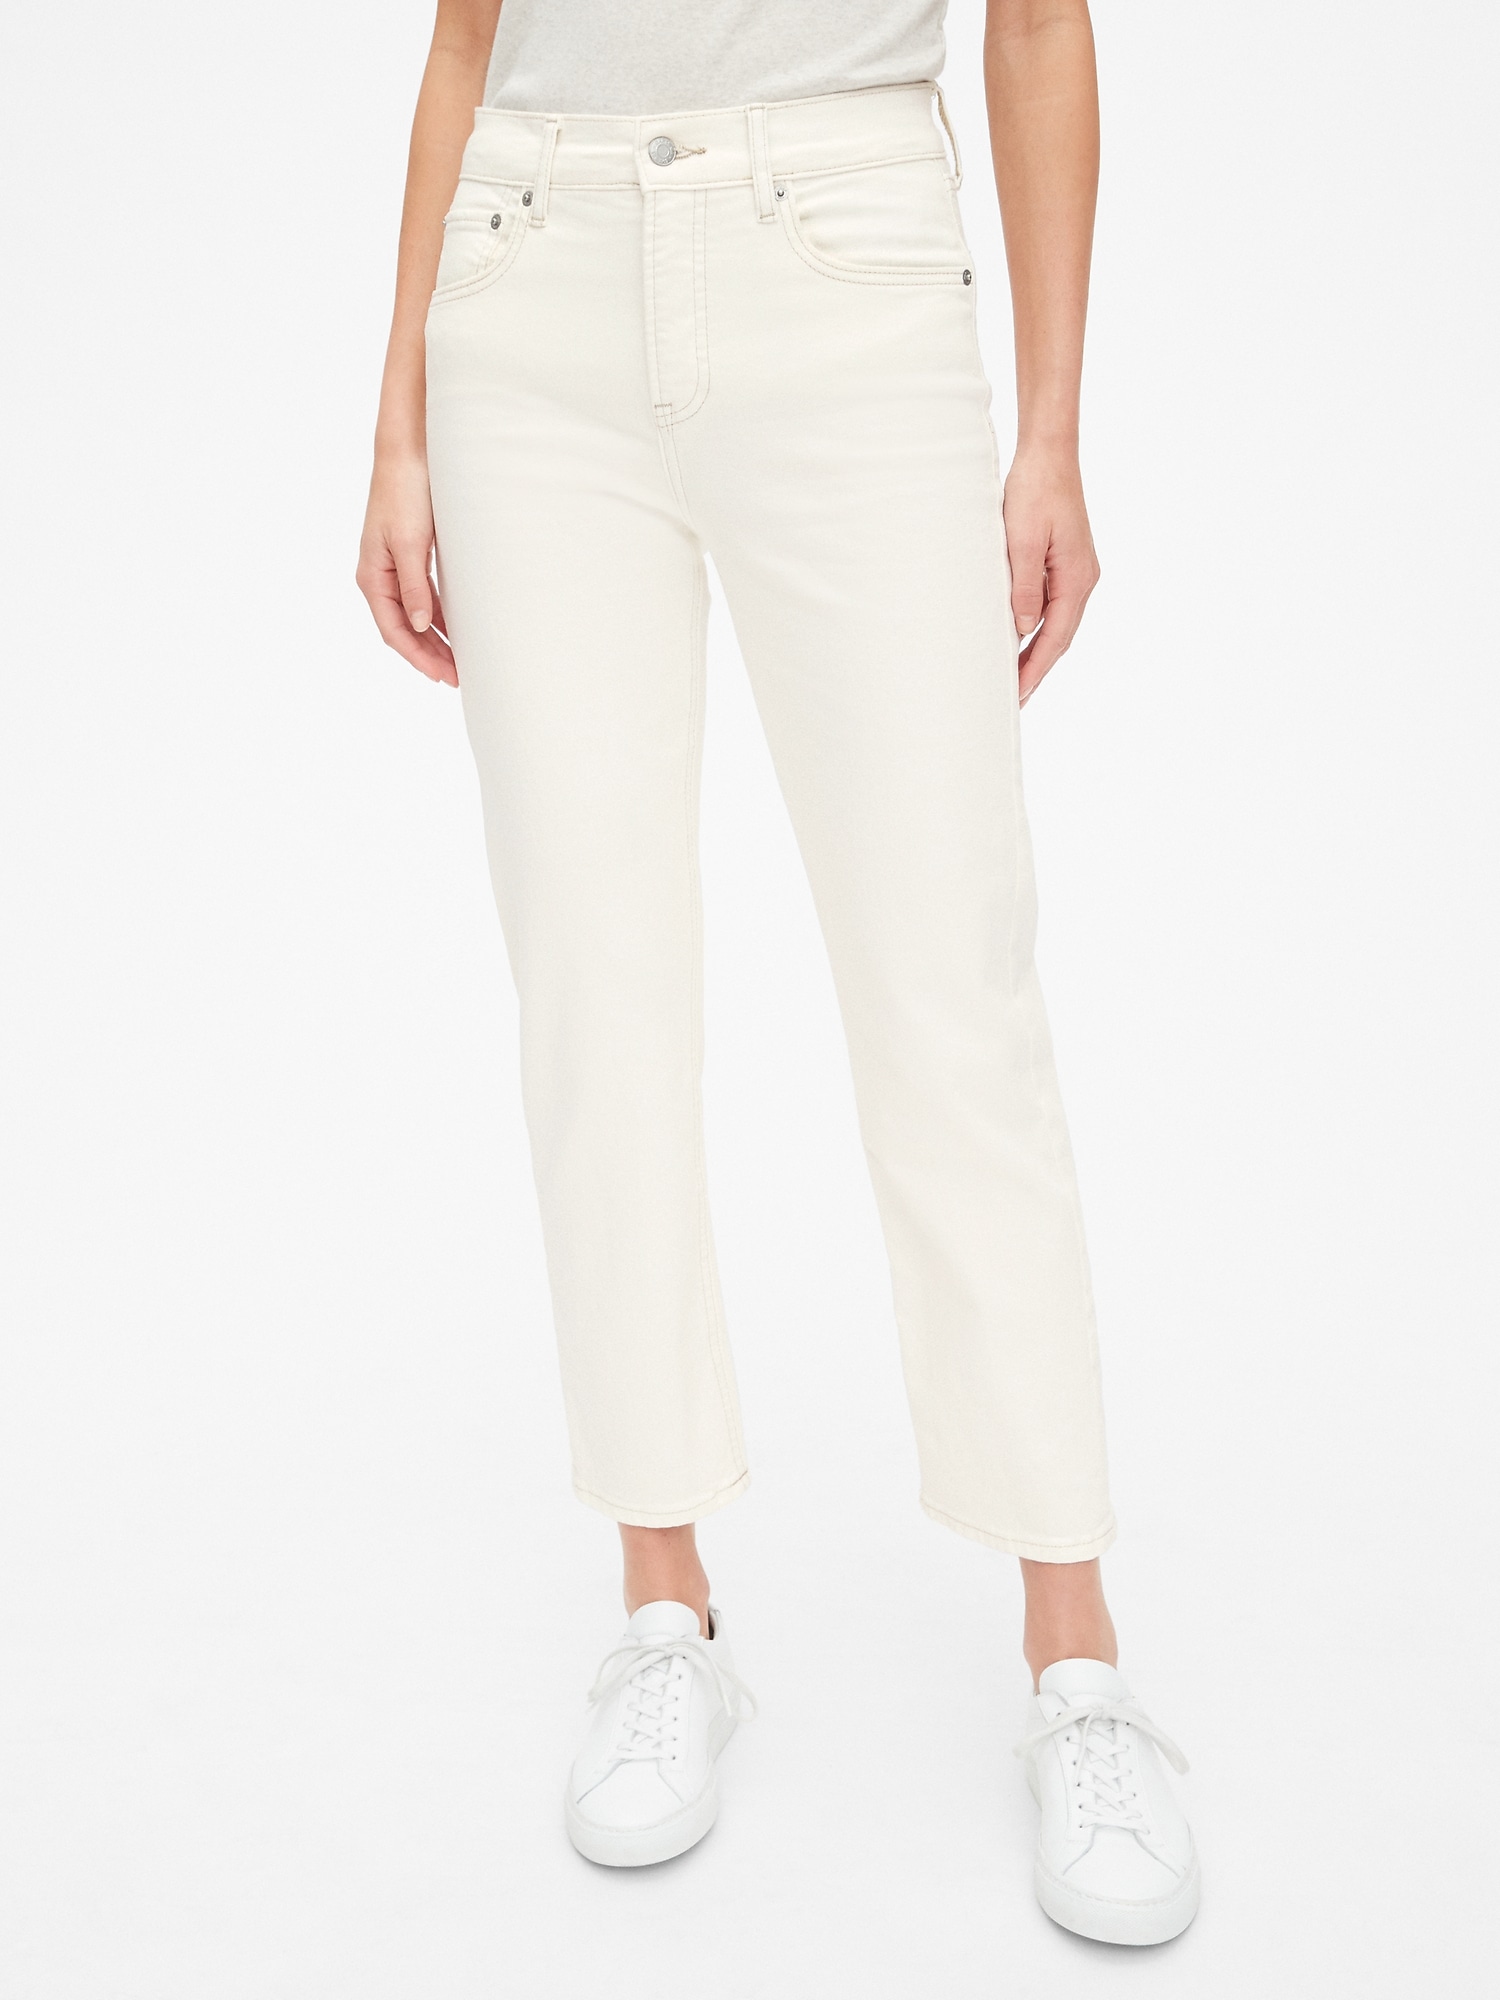 gap white jeans